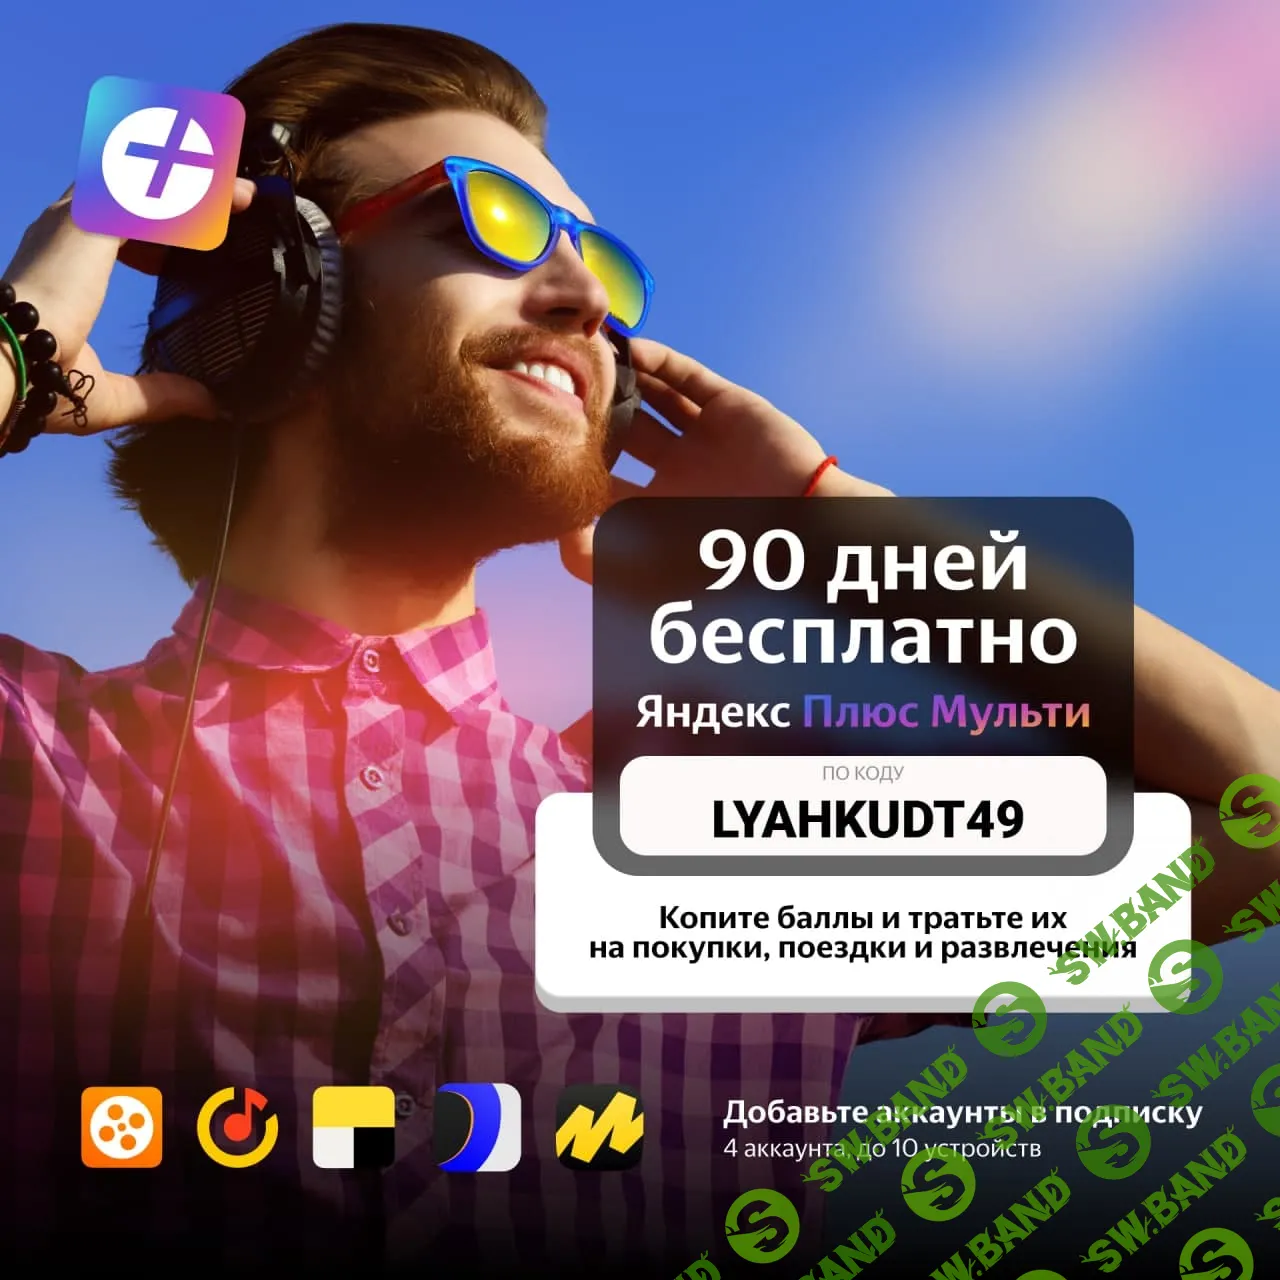 [ХАЛЯВА 2.0] 90 дней Яндекс Плюс Мульти абсолютно бесплатно